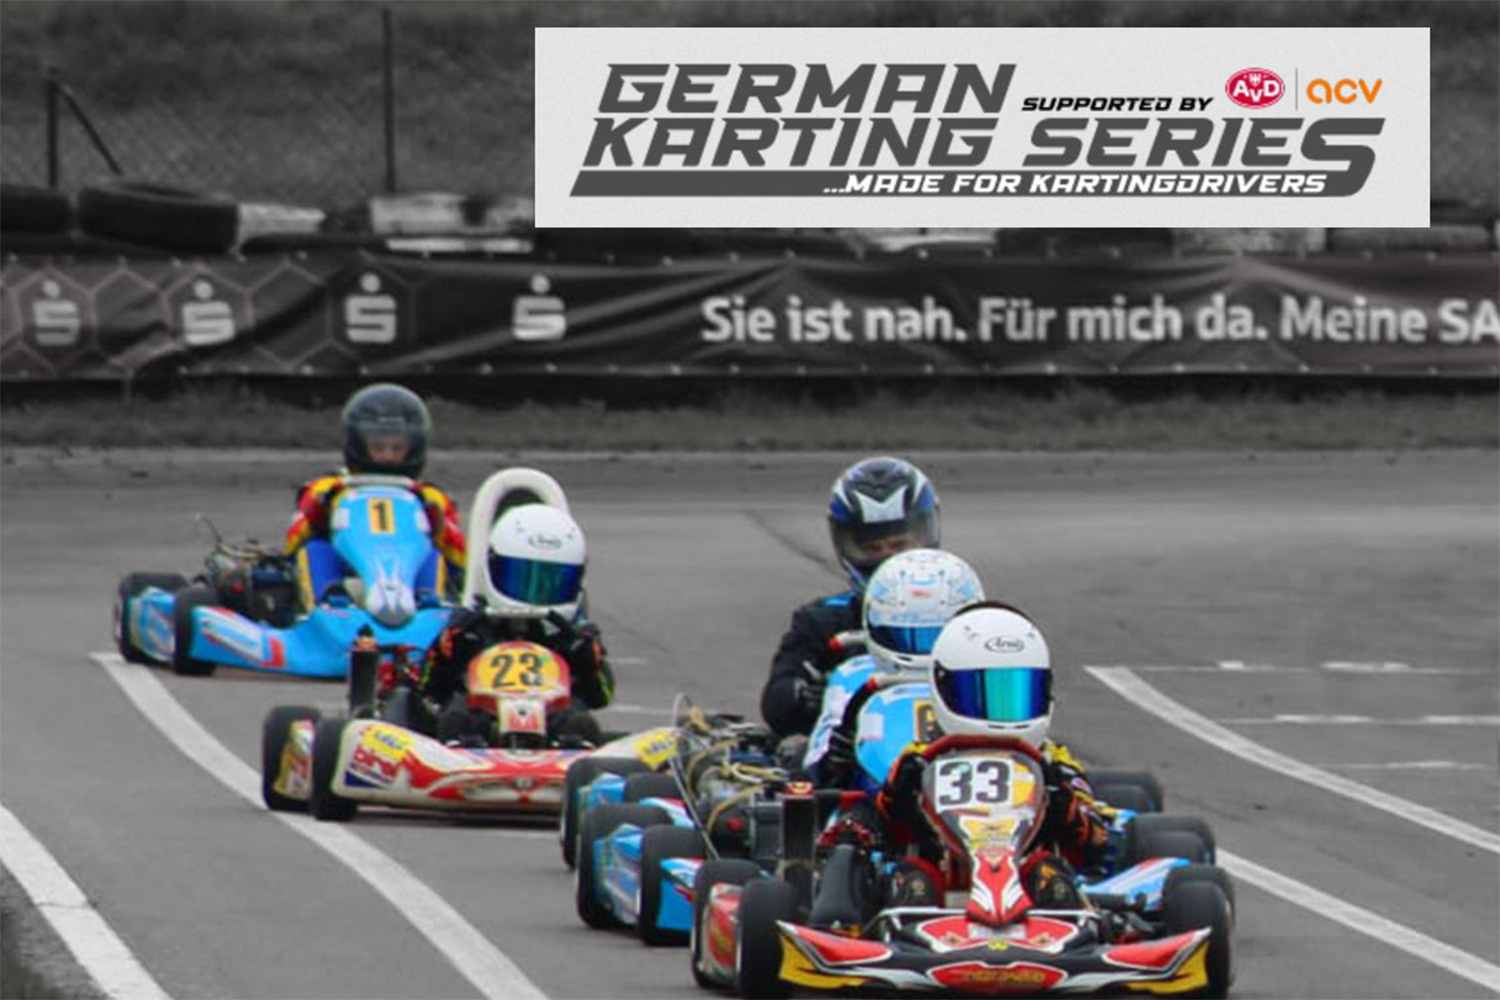 AvD-ACV German Karting Series startet in die erste Saison